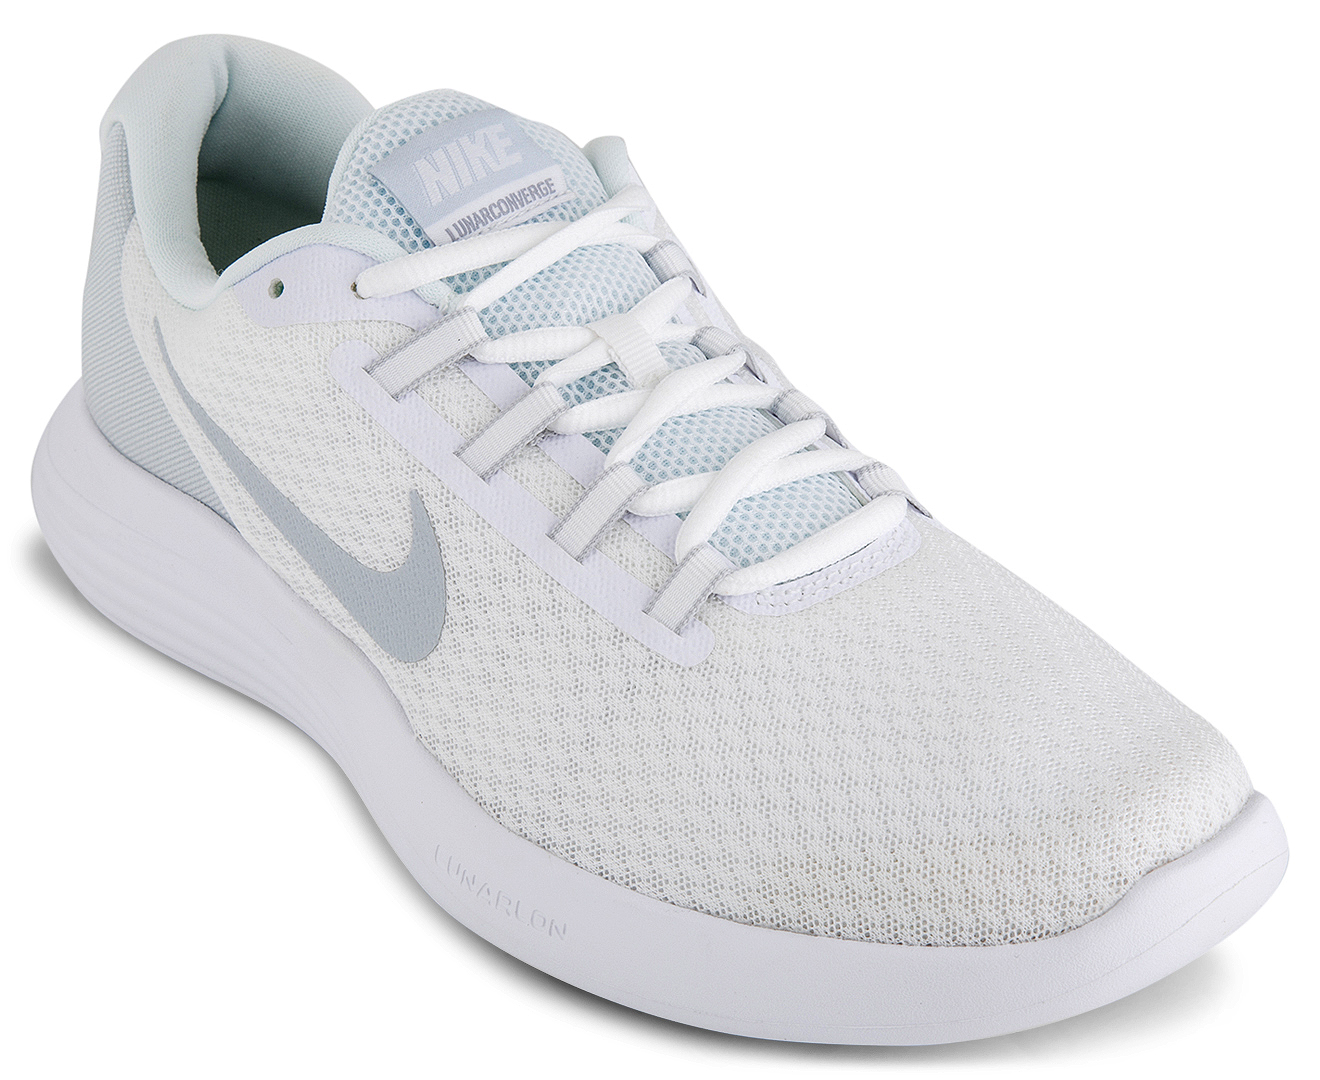 Nike Men's LunarConverge Shoe - White | Catch.co.nz